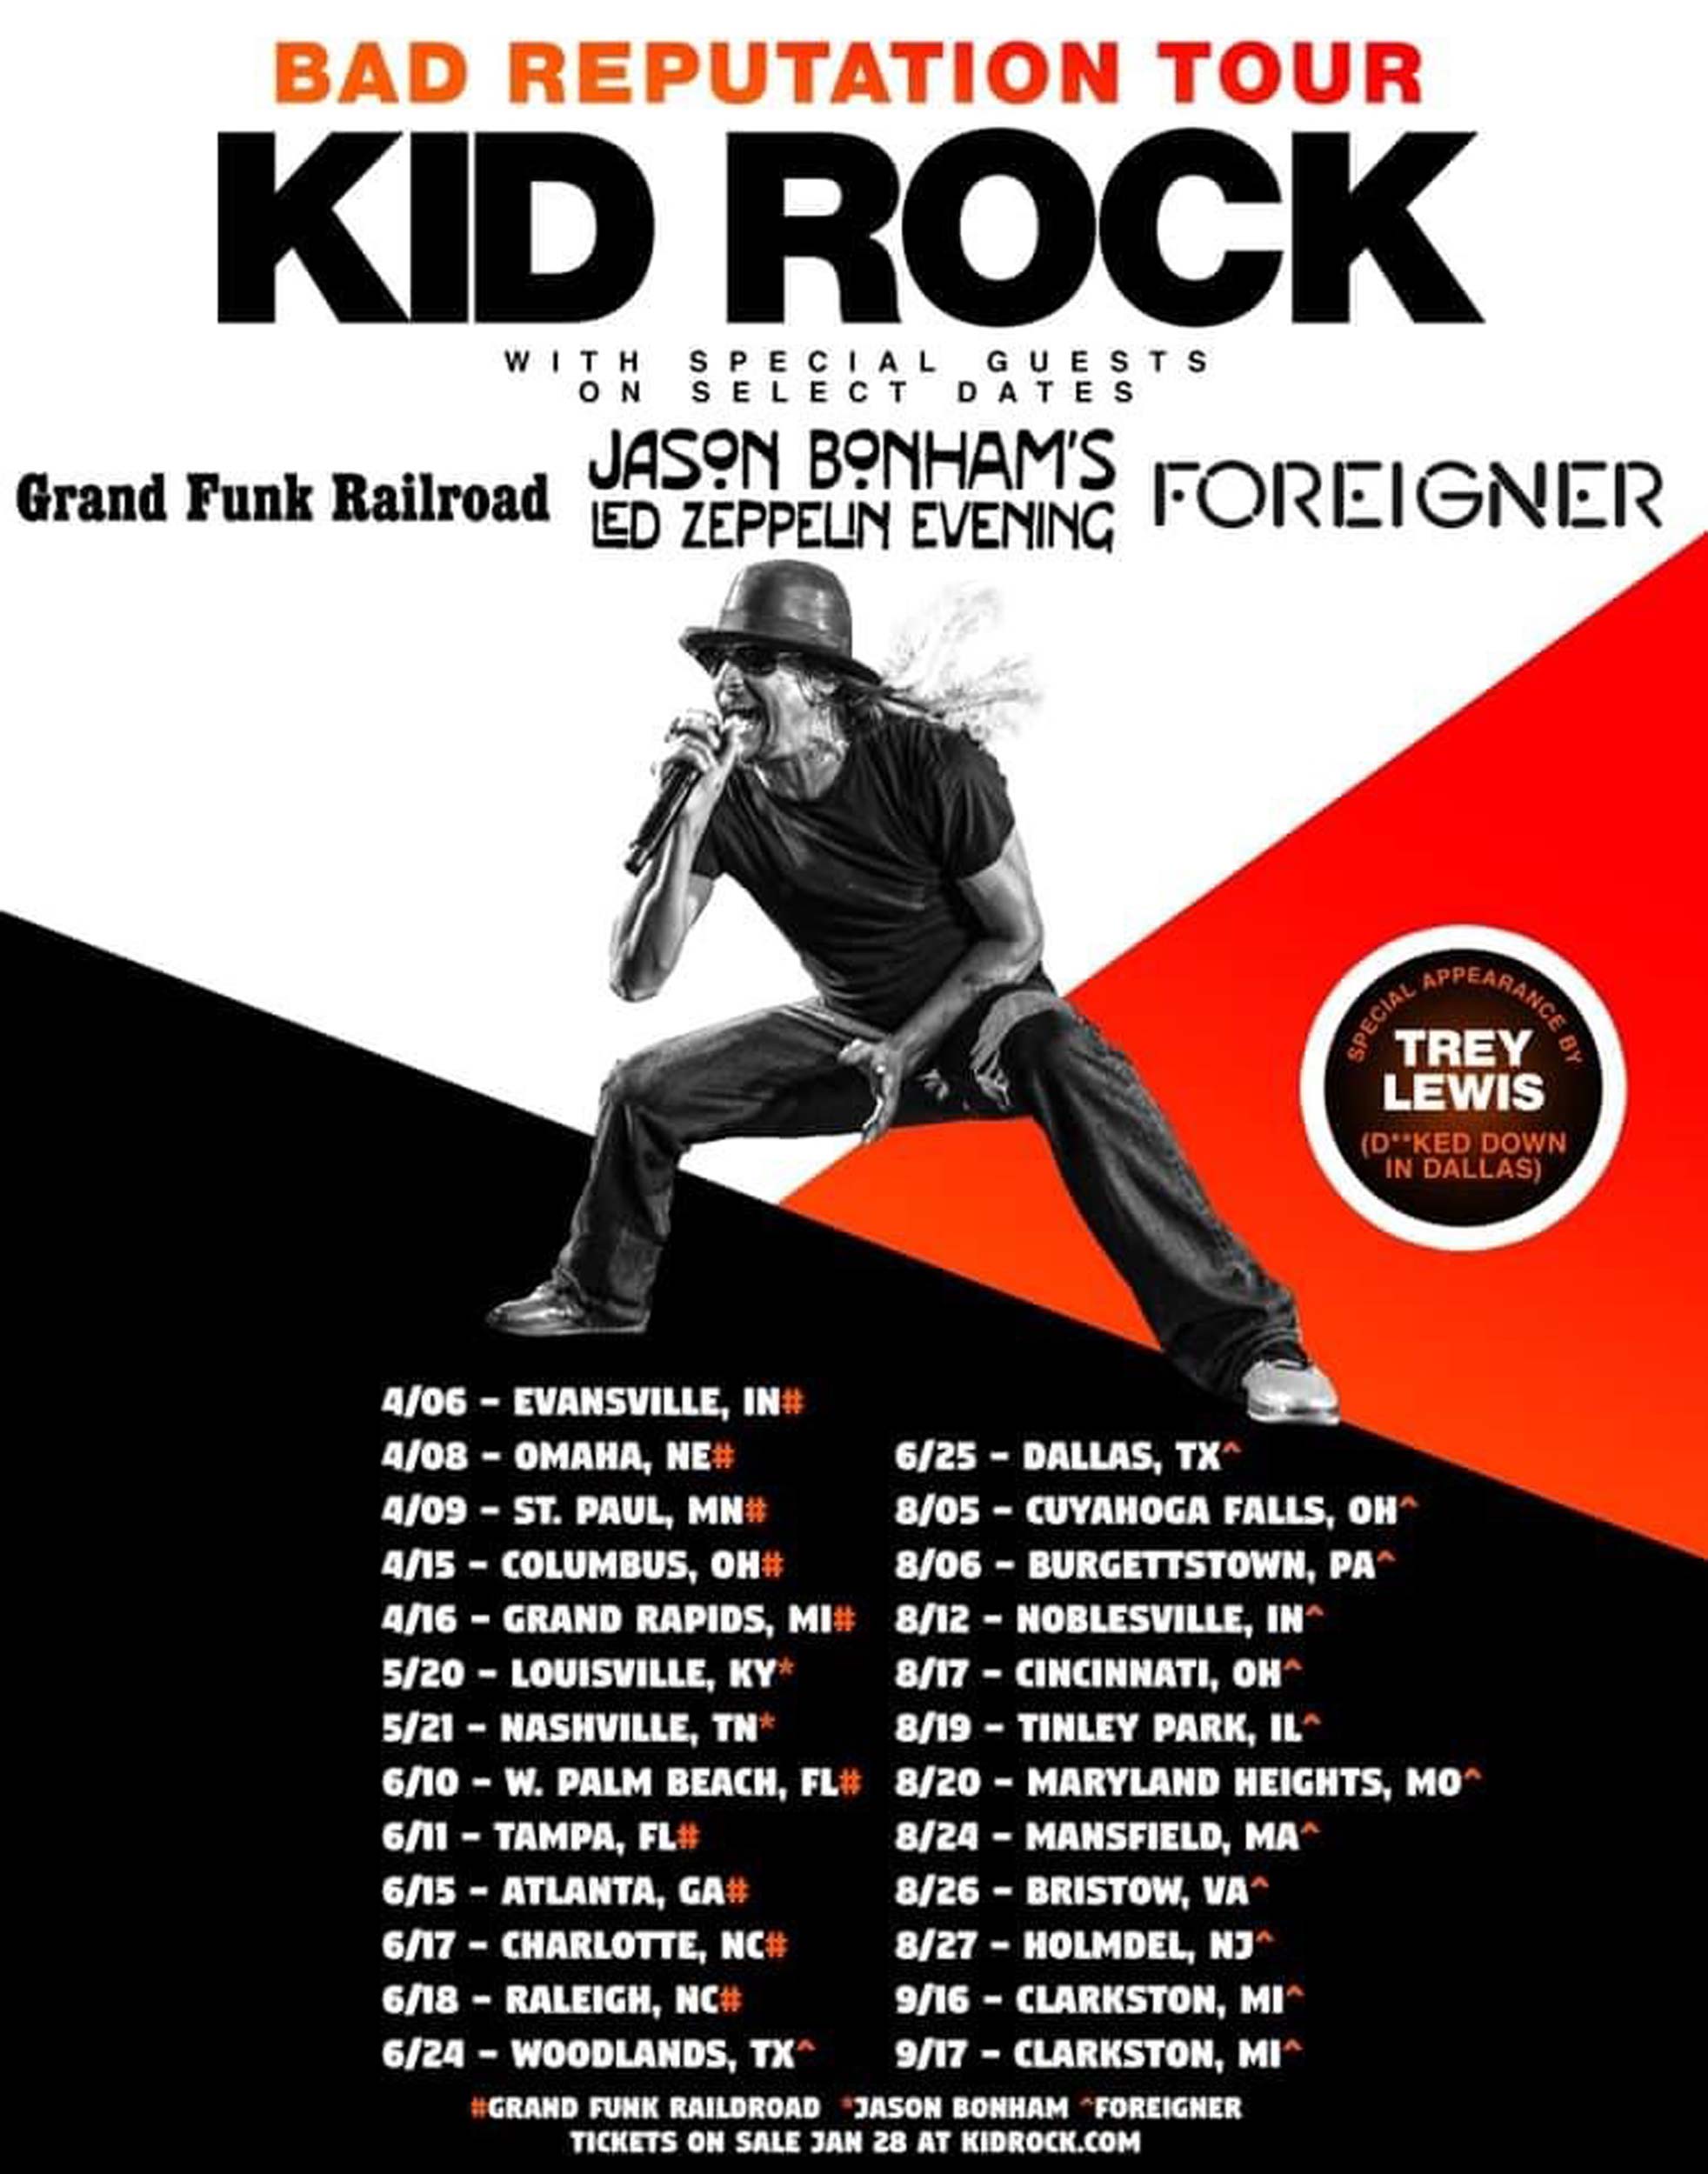 Kid Rock Bad Reputation Tour in Charlotte North Carolina and Atlanta Georgia